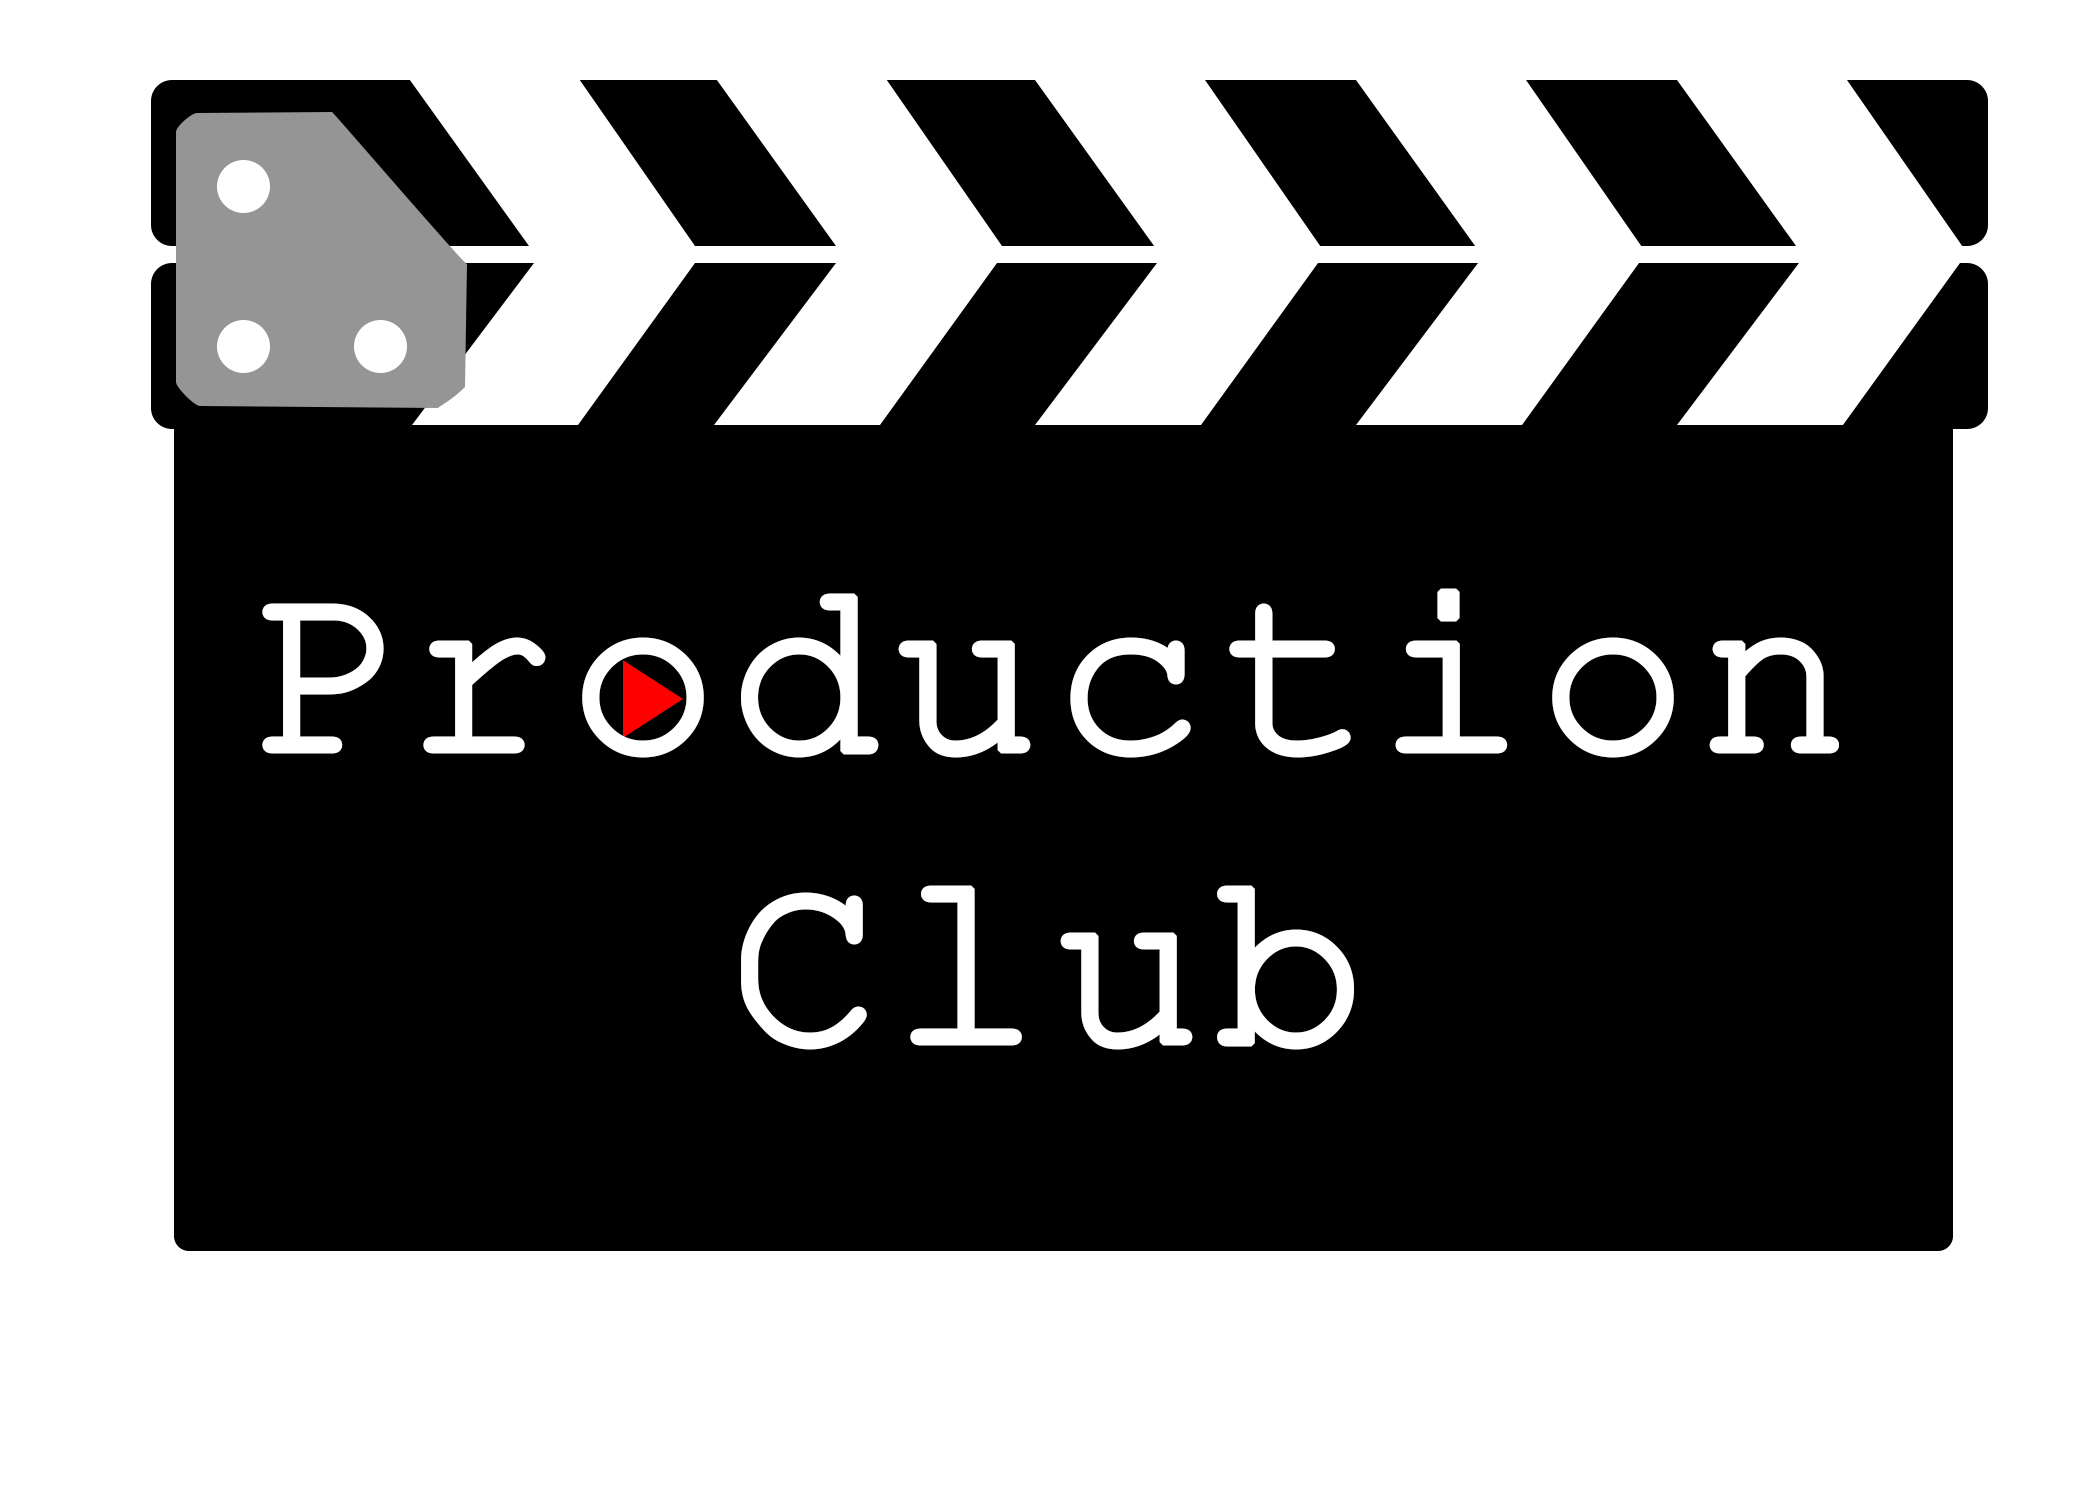 BCAT production club logo